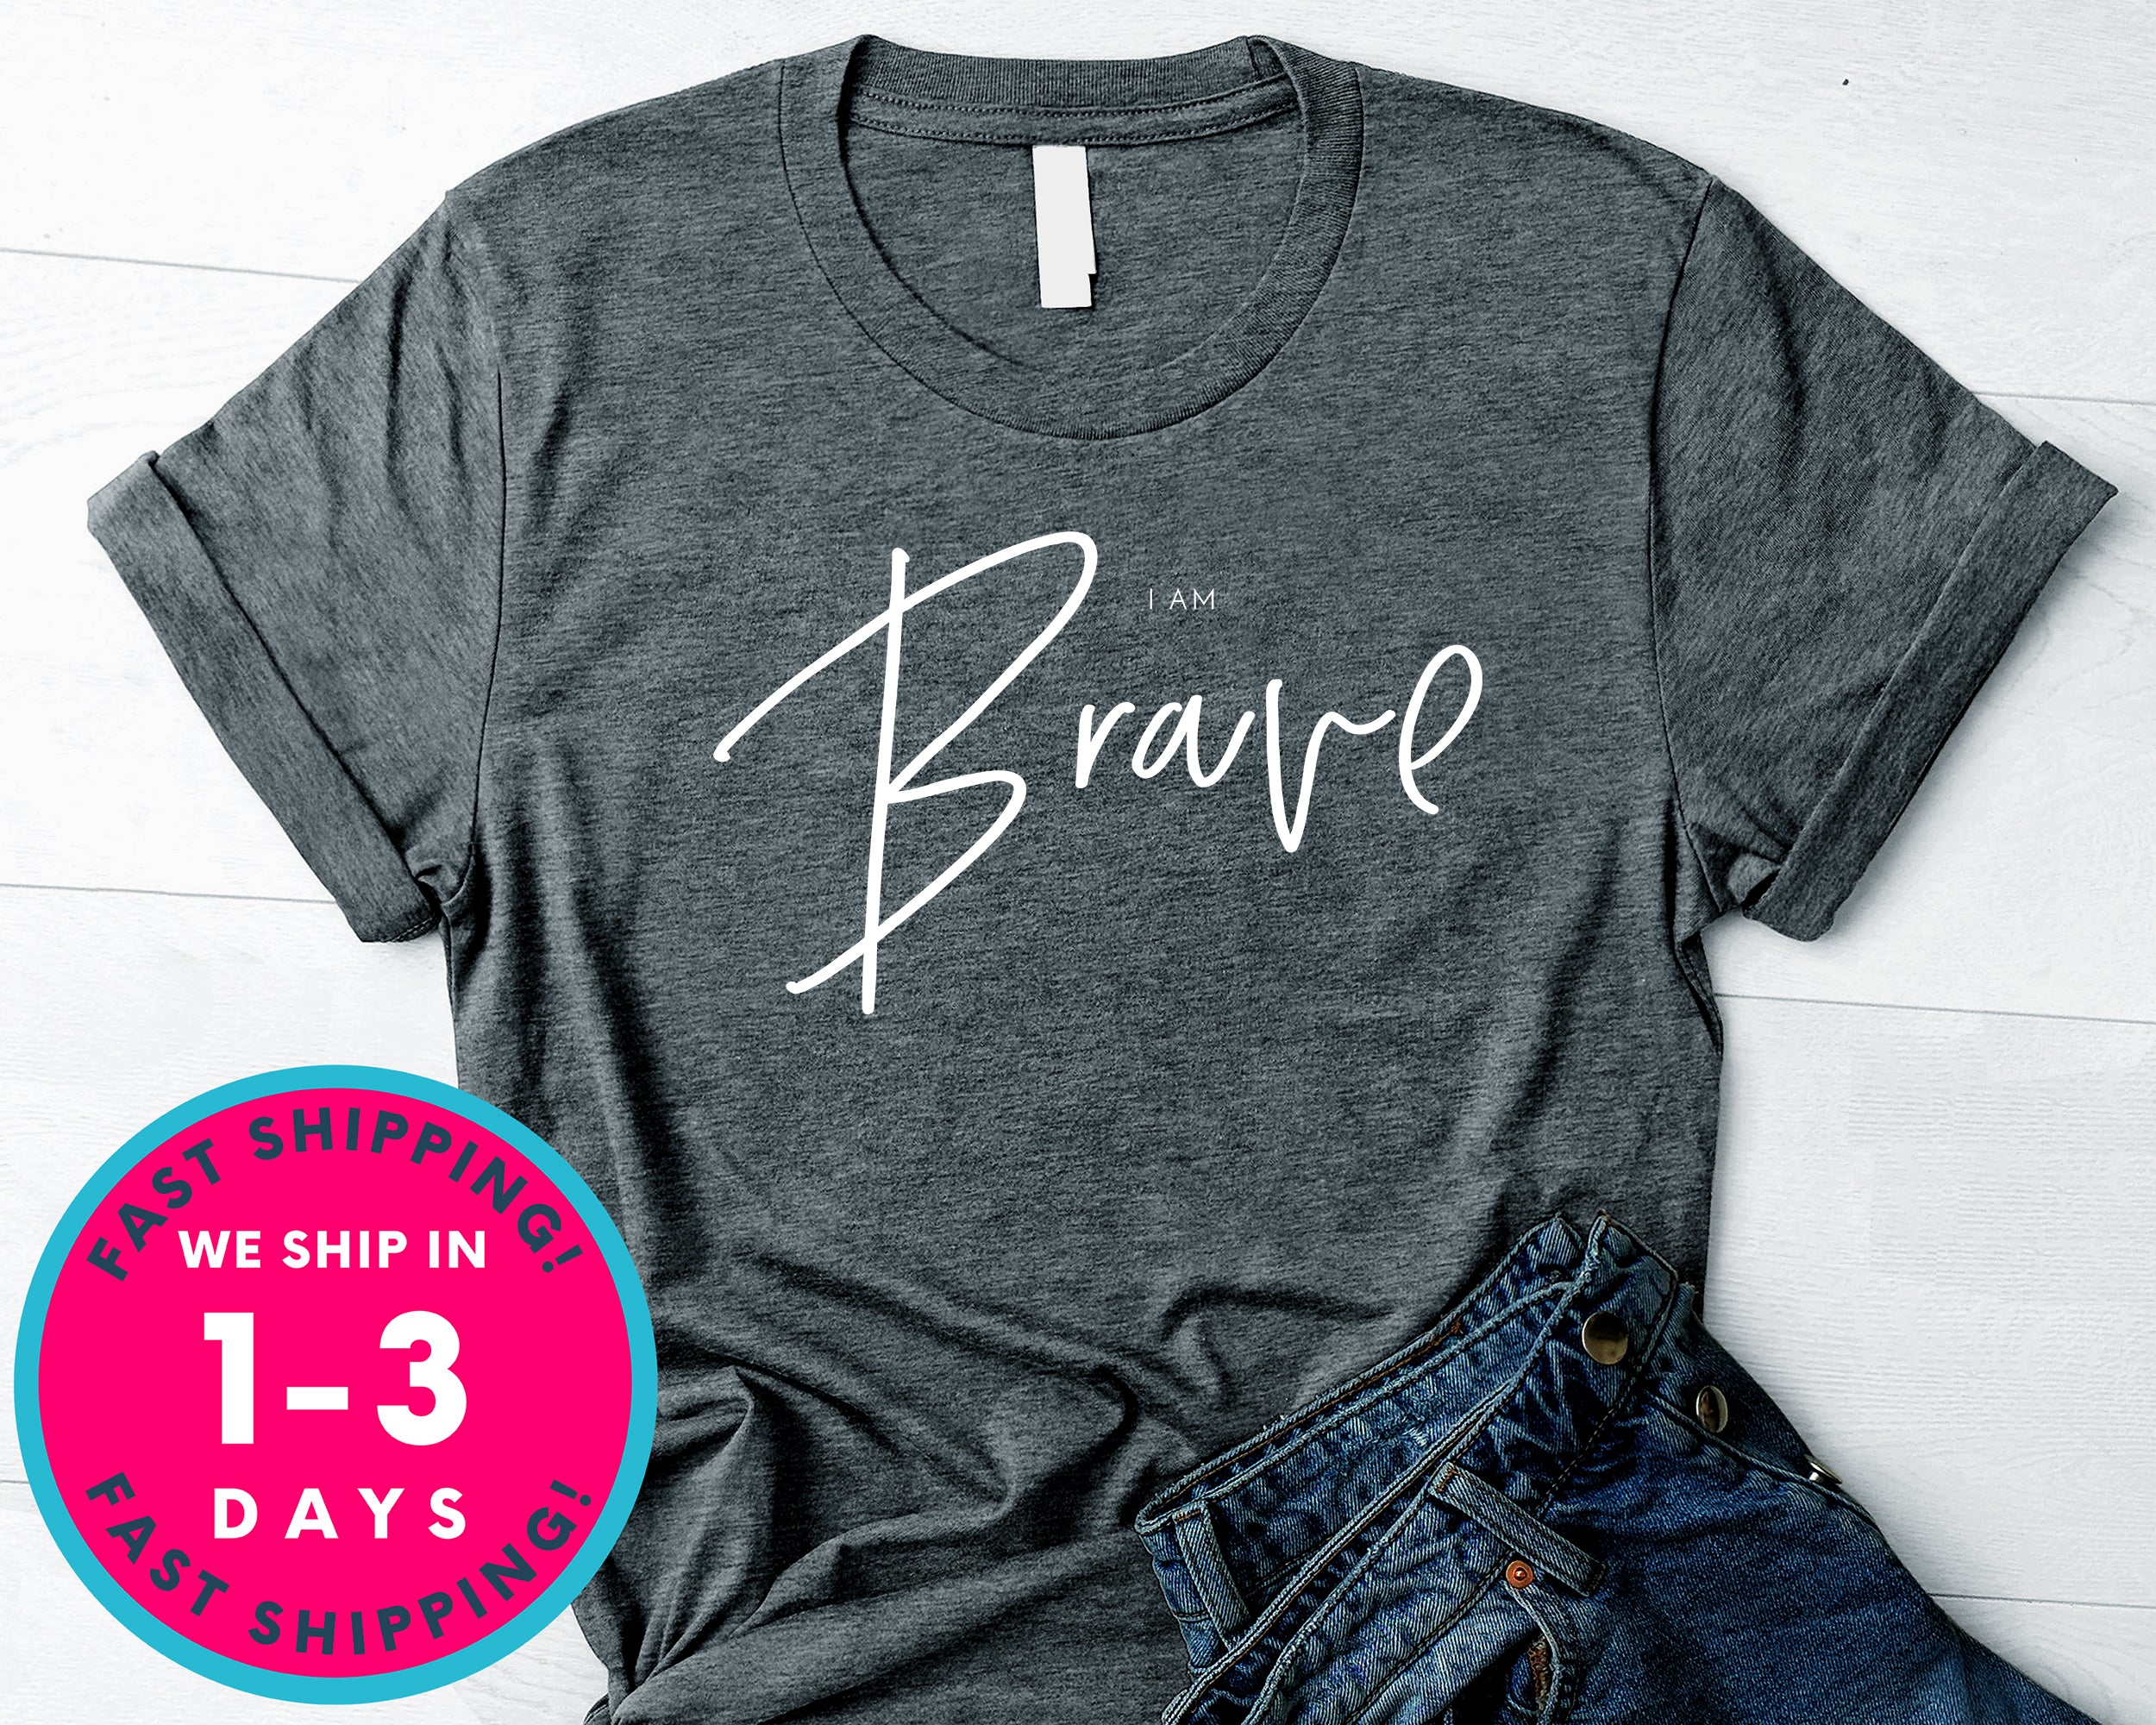 Be Brave T-Shirt - Inspirational Quotes Saying Shirt